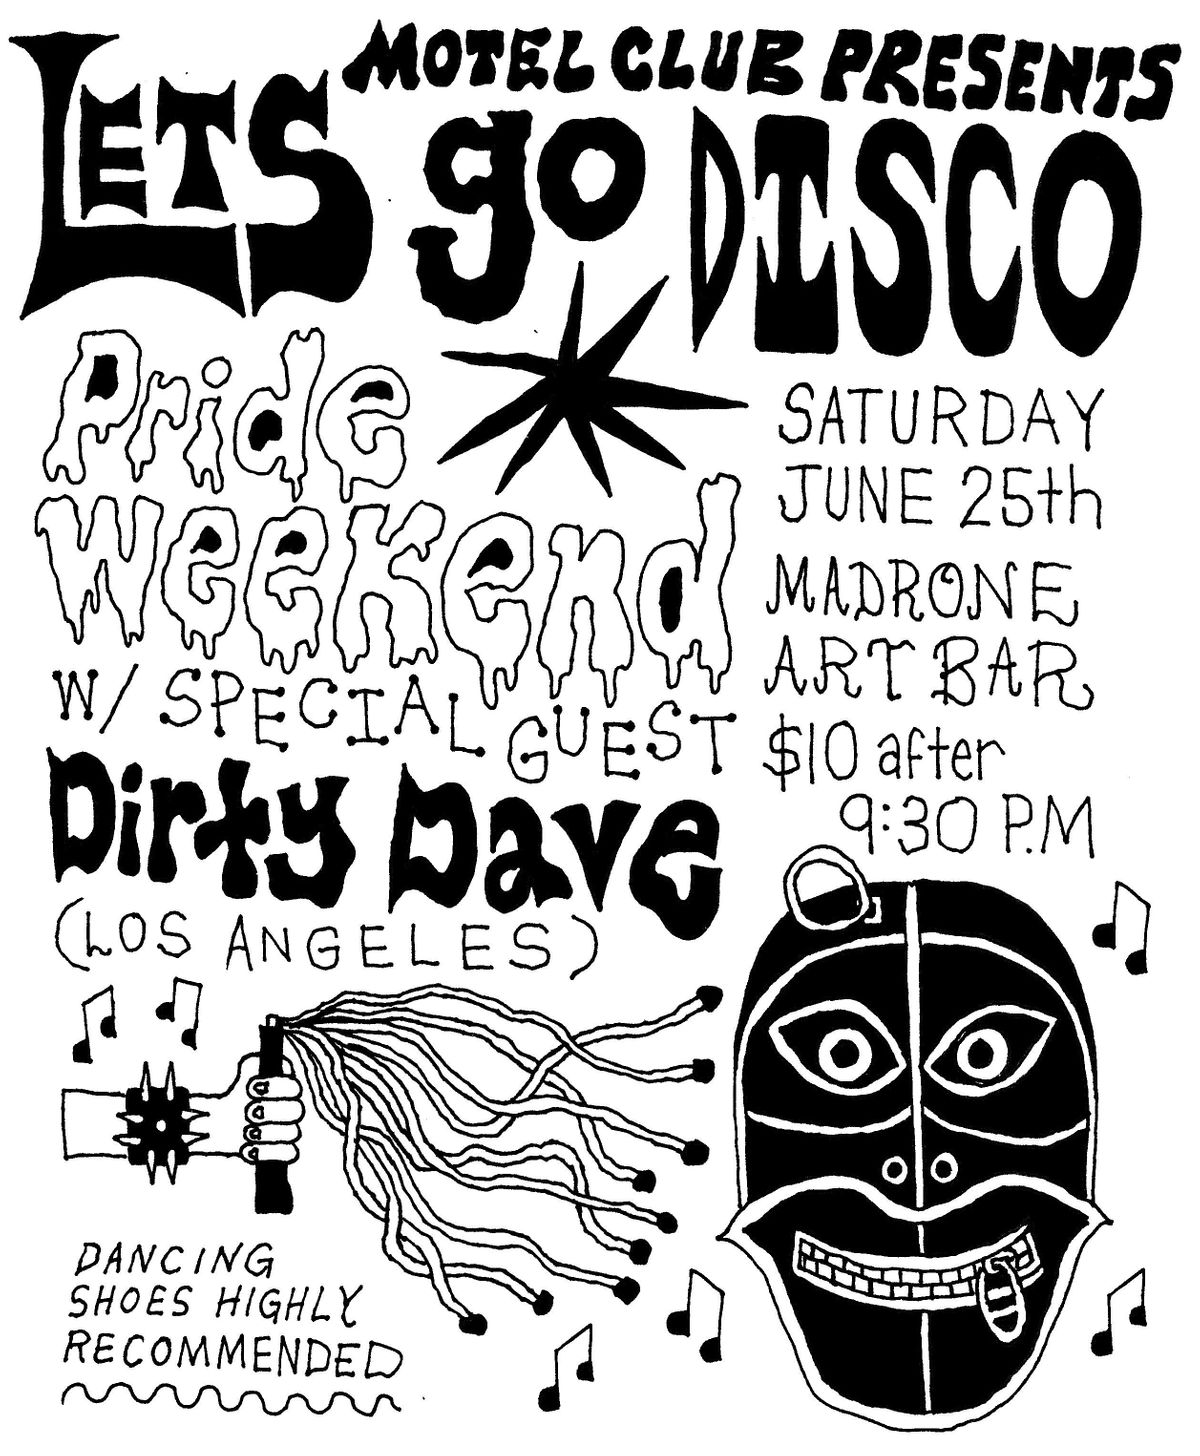 Let's Go Disco @ MADRONE ART BAR